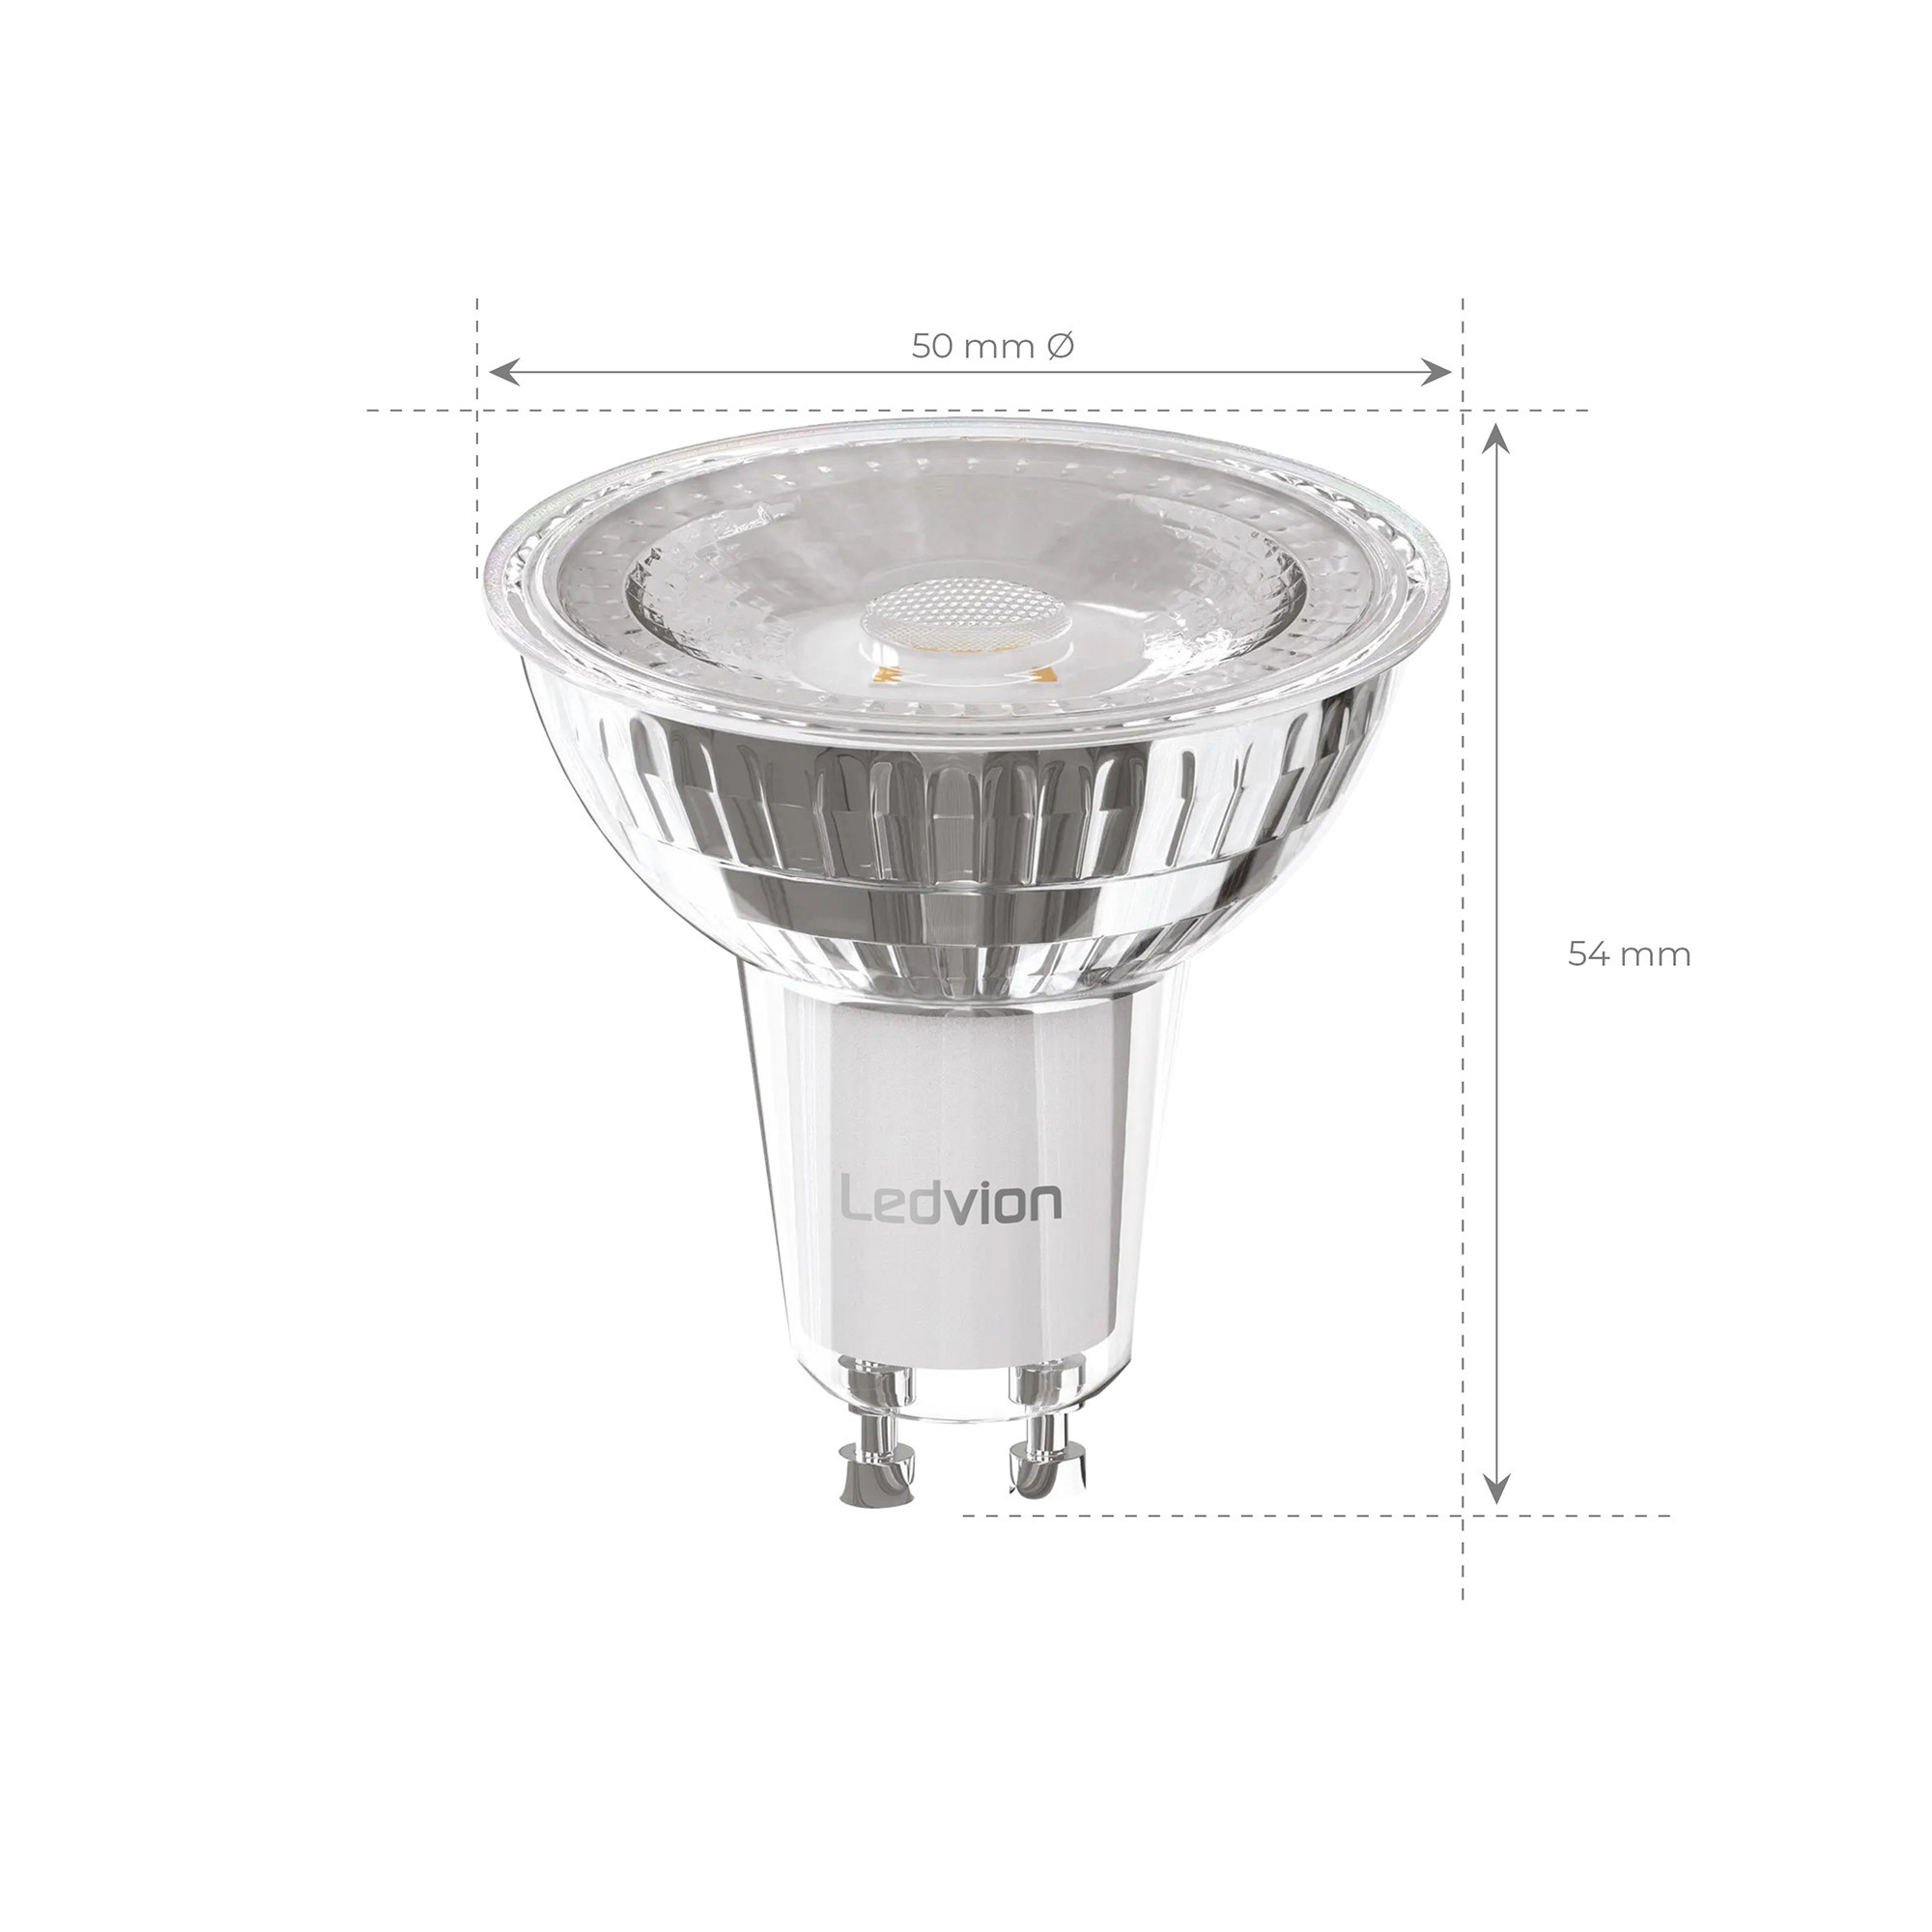 Dij verbinding verbroken maag Ledvion Dimbare GU10 LED Spot - 5W - 4000K - 345 Lumen - Full Glass -  Lightexpert.nl